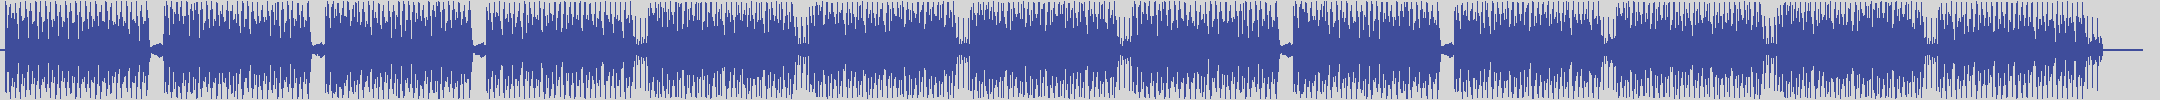 nf_boyz_records [NFY032] Renault Powell - Beautiful Dark [Anthony Maserati's V8 Mix] audio wave form